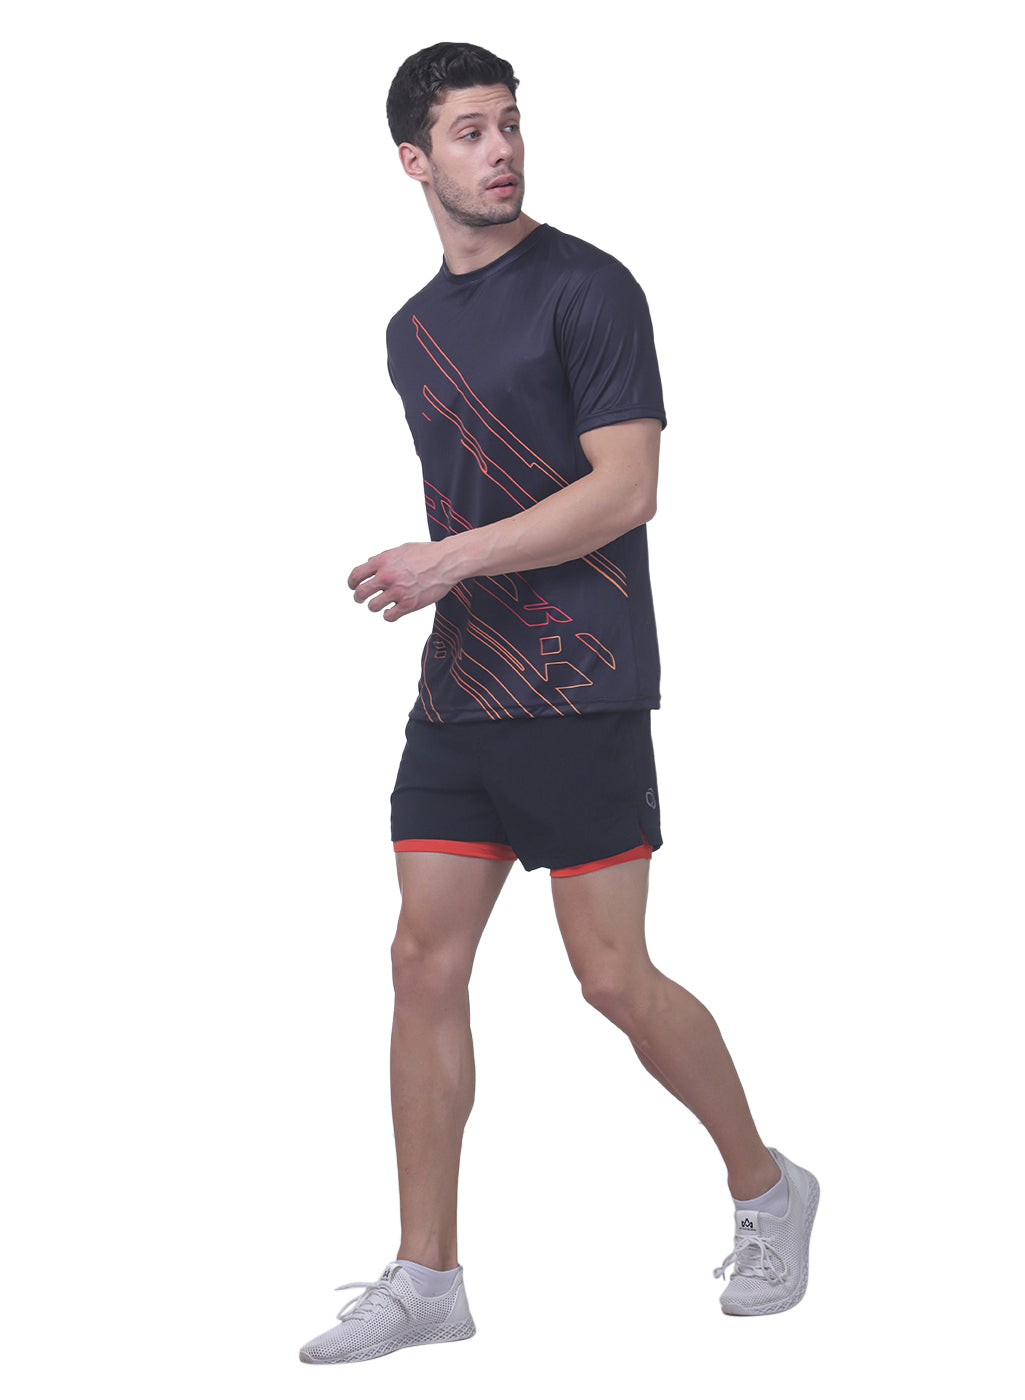 5" Running Shorts with water resistant phone pocket - Men's Black Orange Double Layer - TRUEREVO